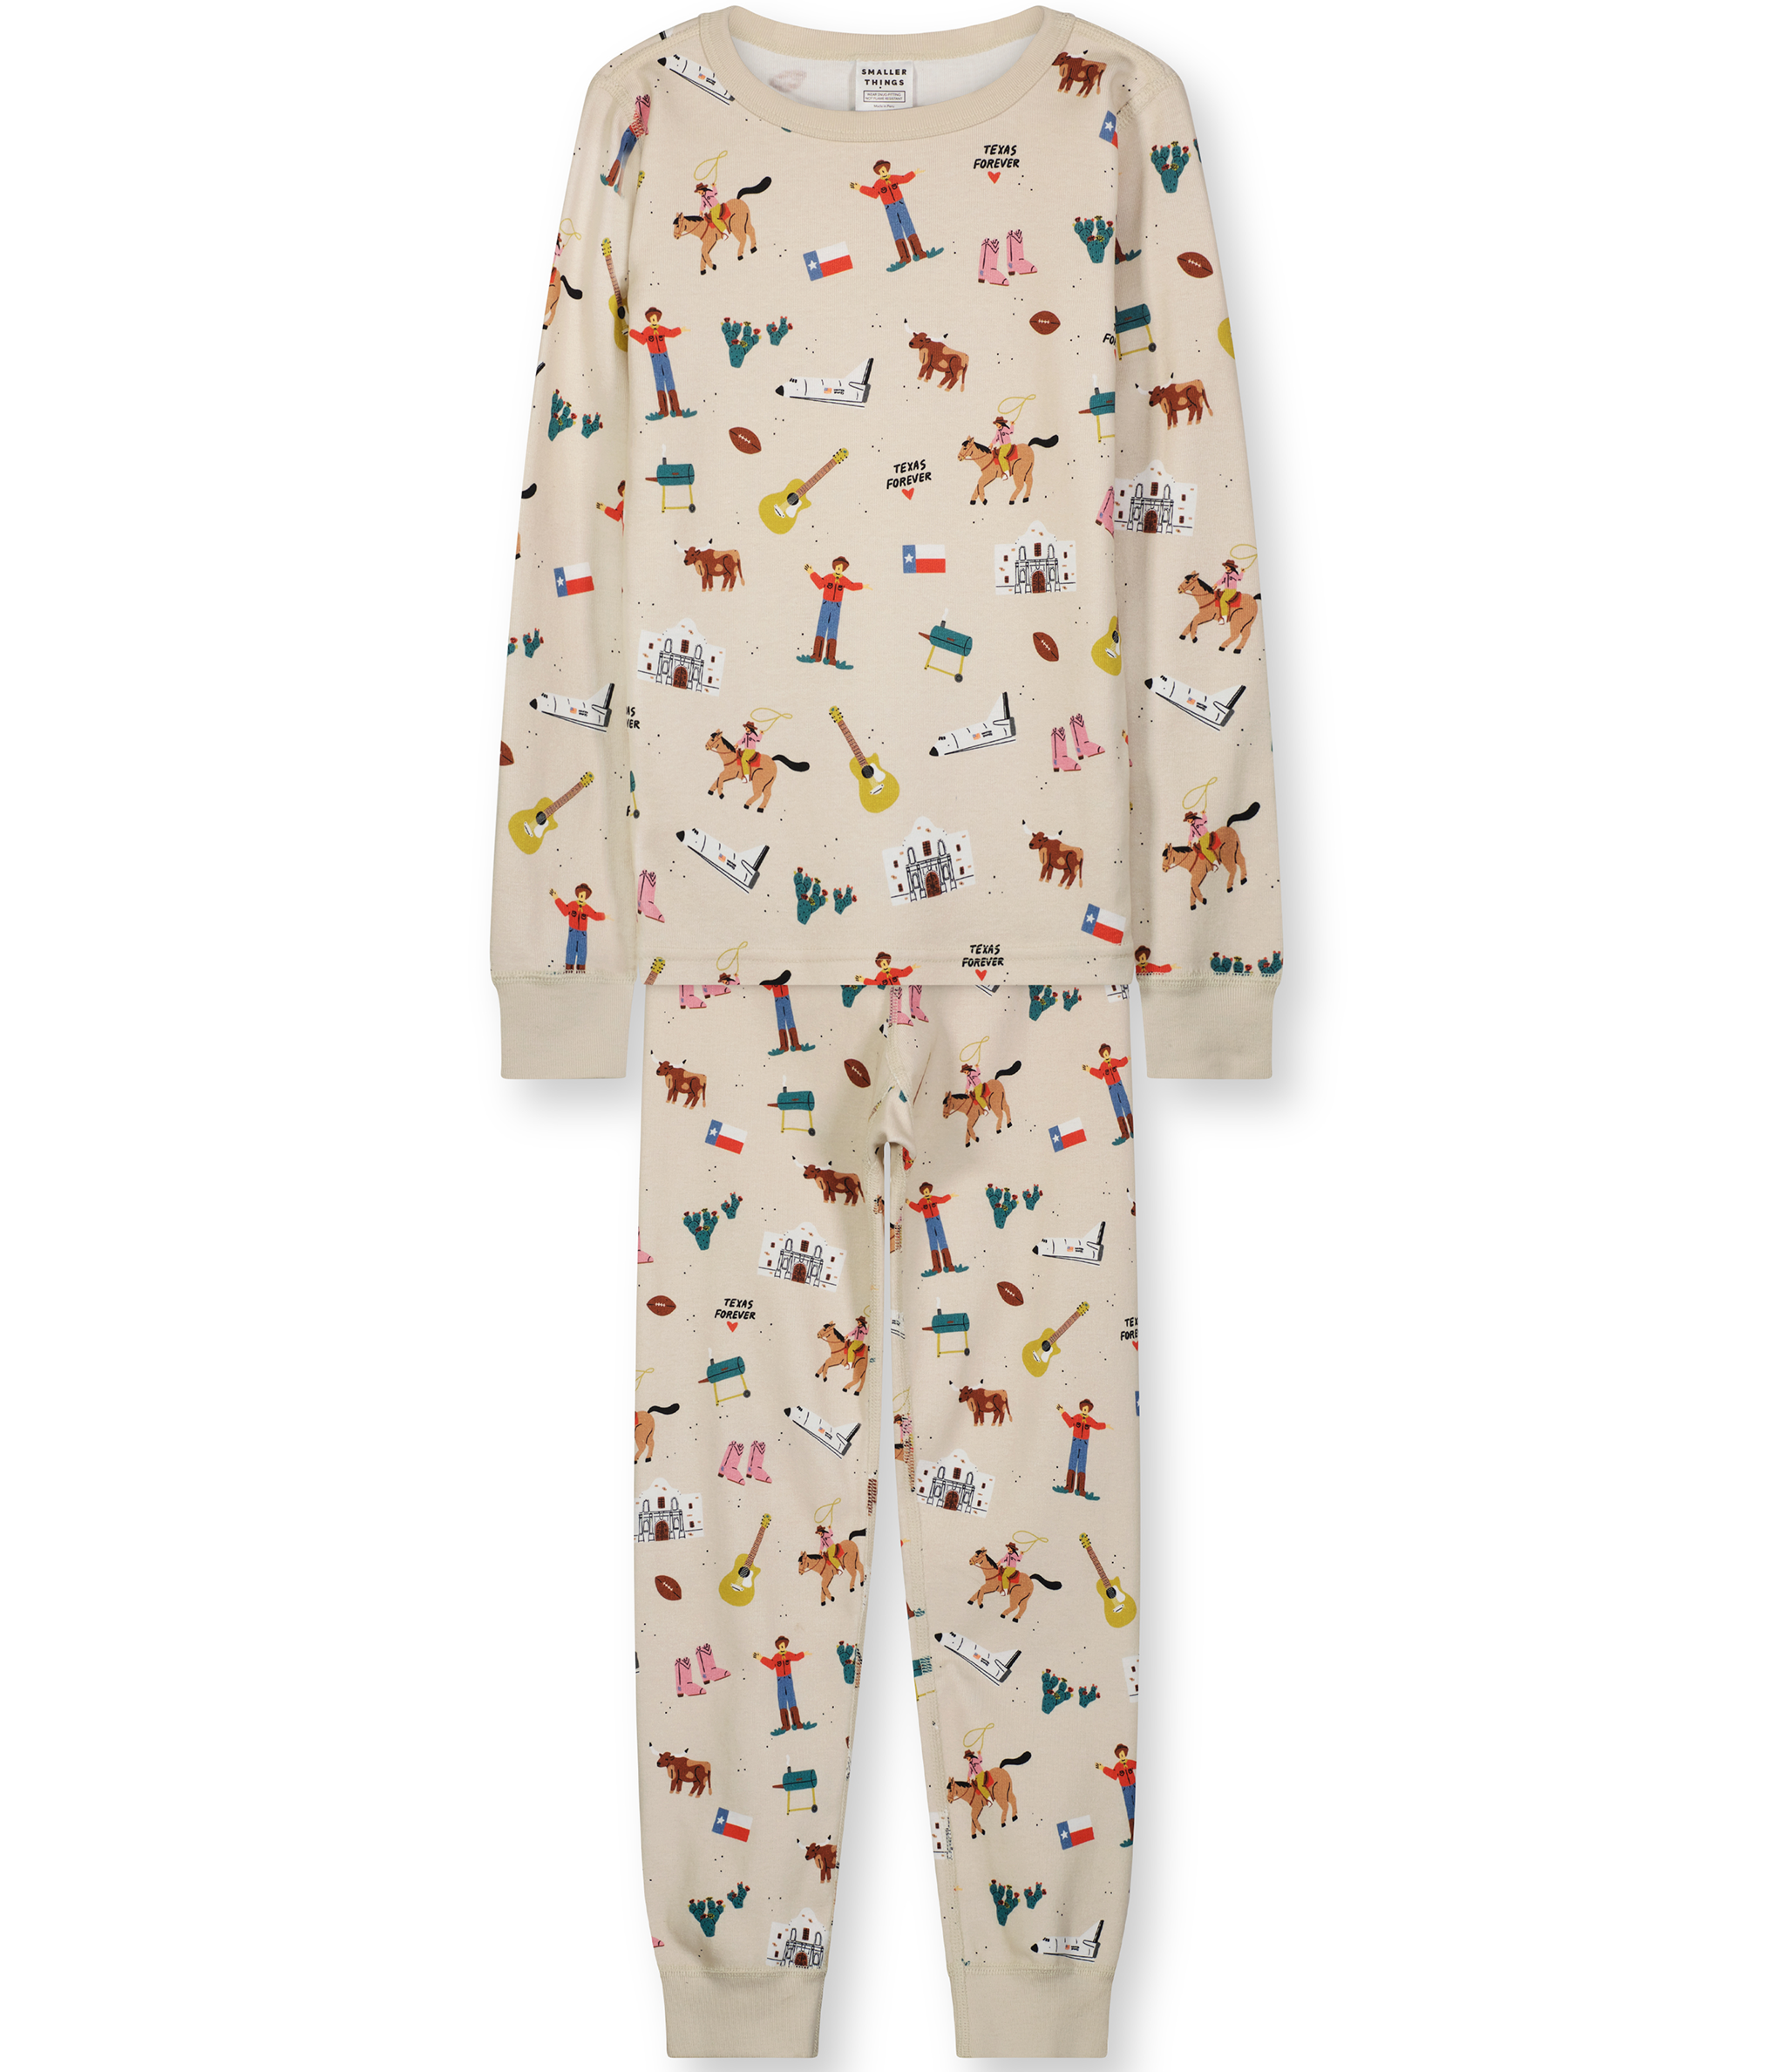 Boys and Girls Soft Organic Cotton Snug Fit Pajama Sets